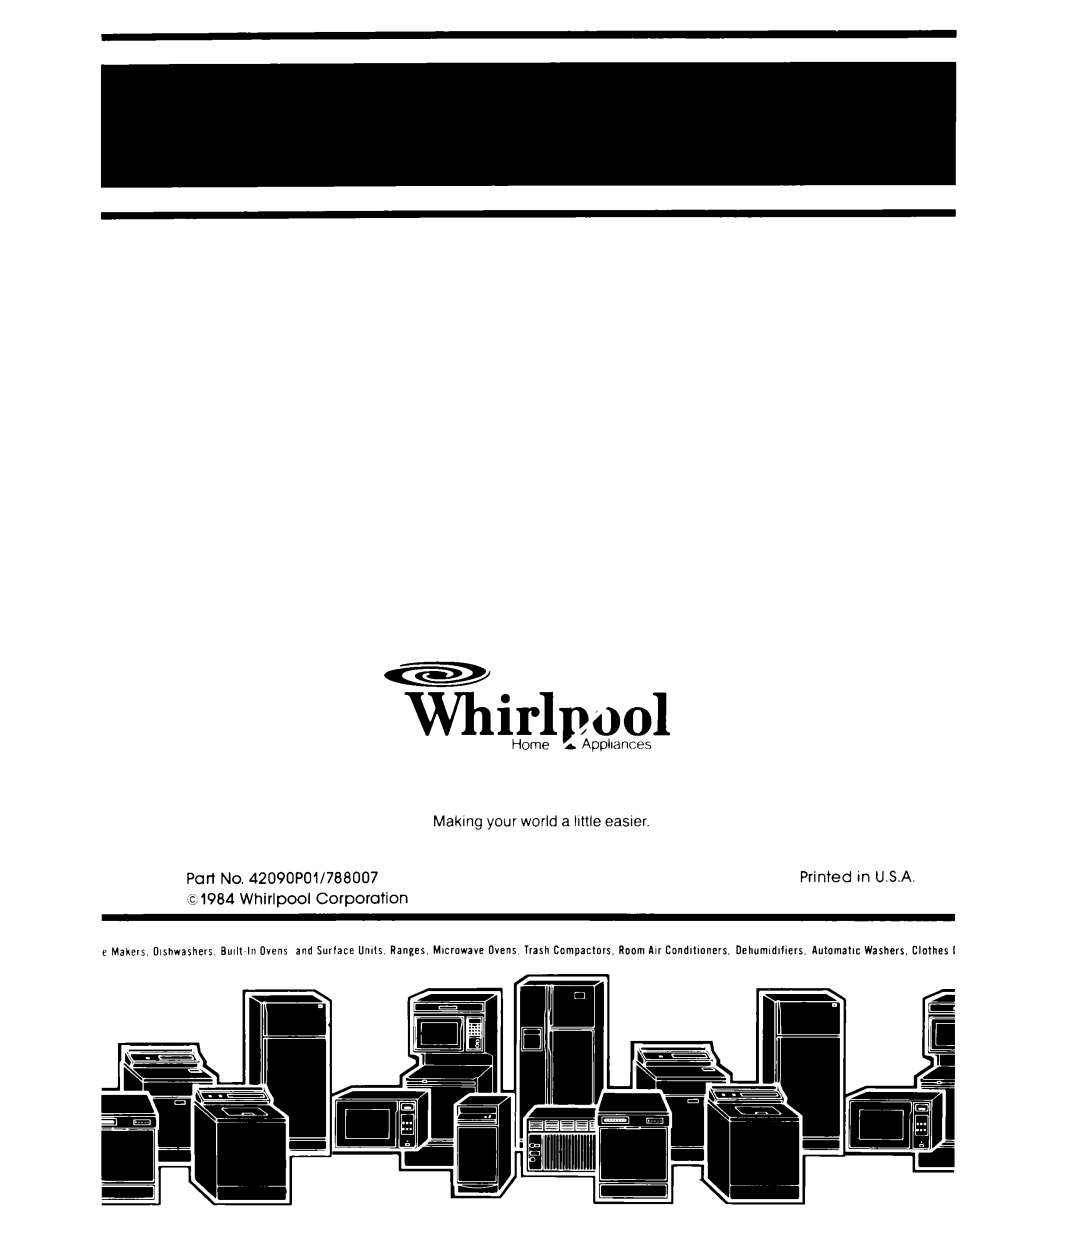 Whirlpool MW3000XM manual Whirlp001, ‘~$1984 Whirlpool, e Makers. Dishwashers, Bu~ll-InOvens, Oehumldlflers, Automatic 